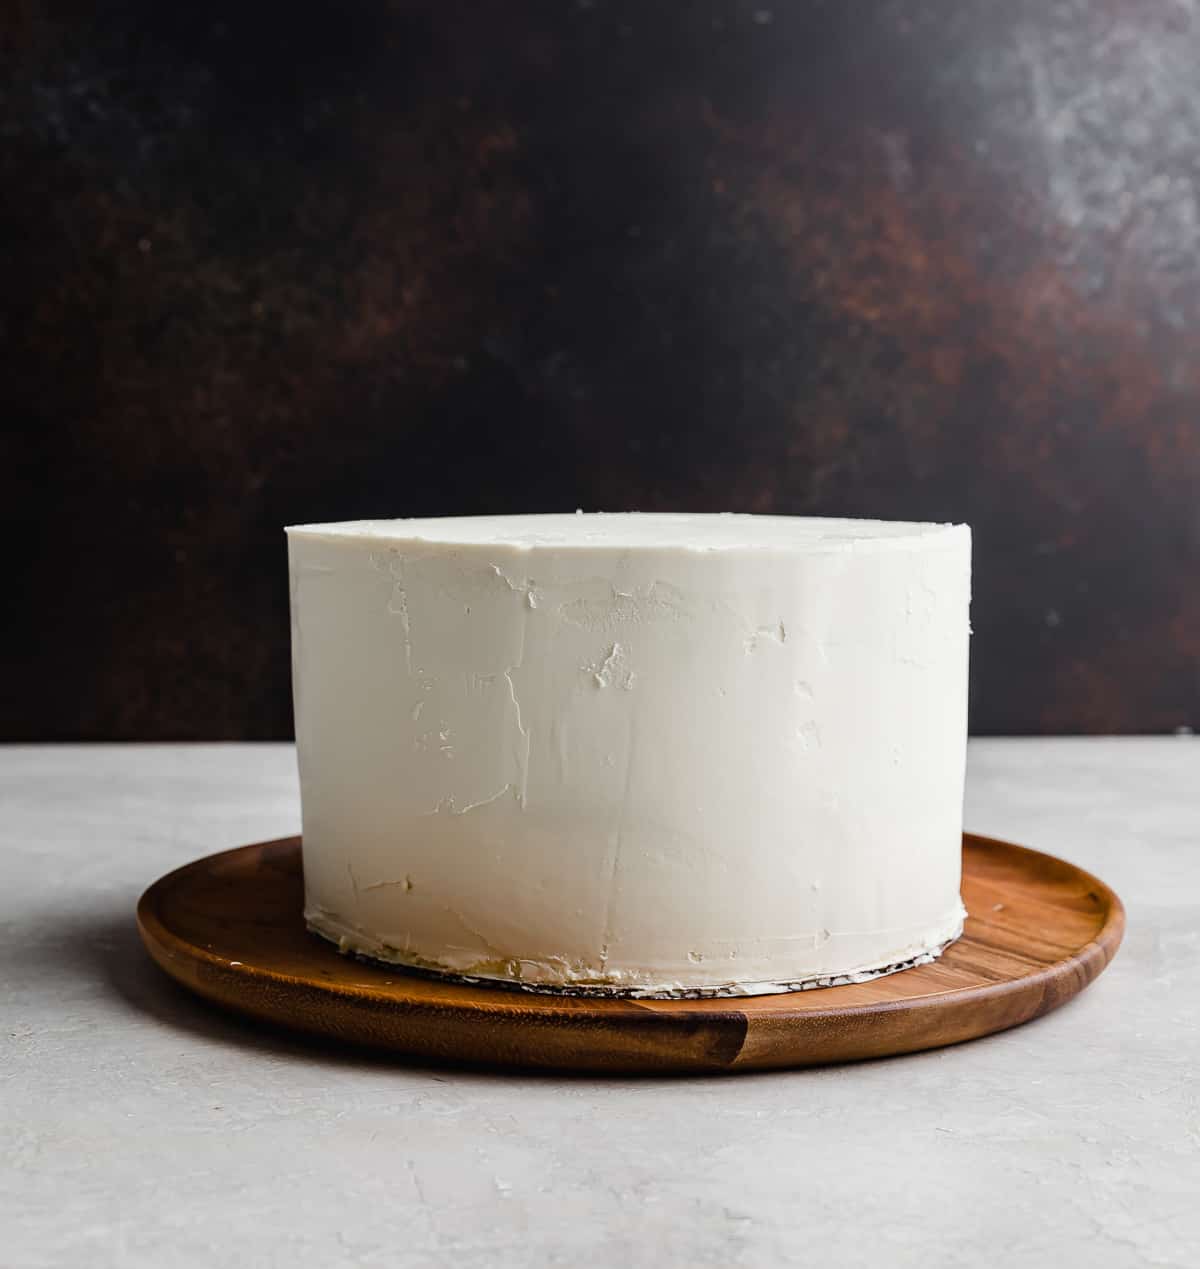 A white chocolate ganache covered round 3 tier layer cake.